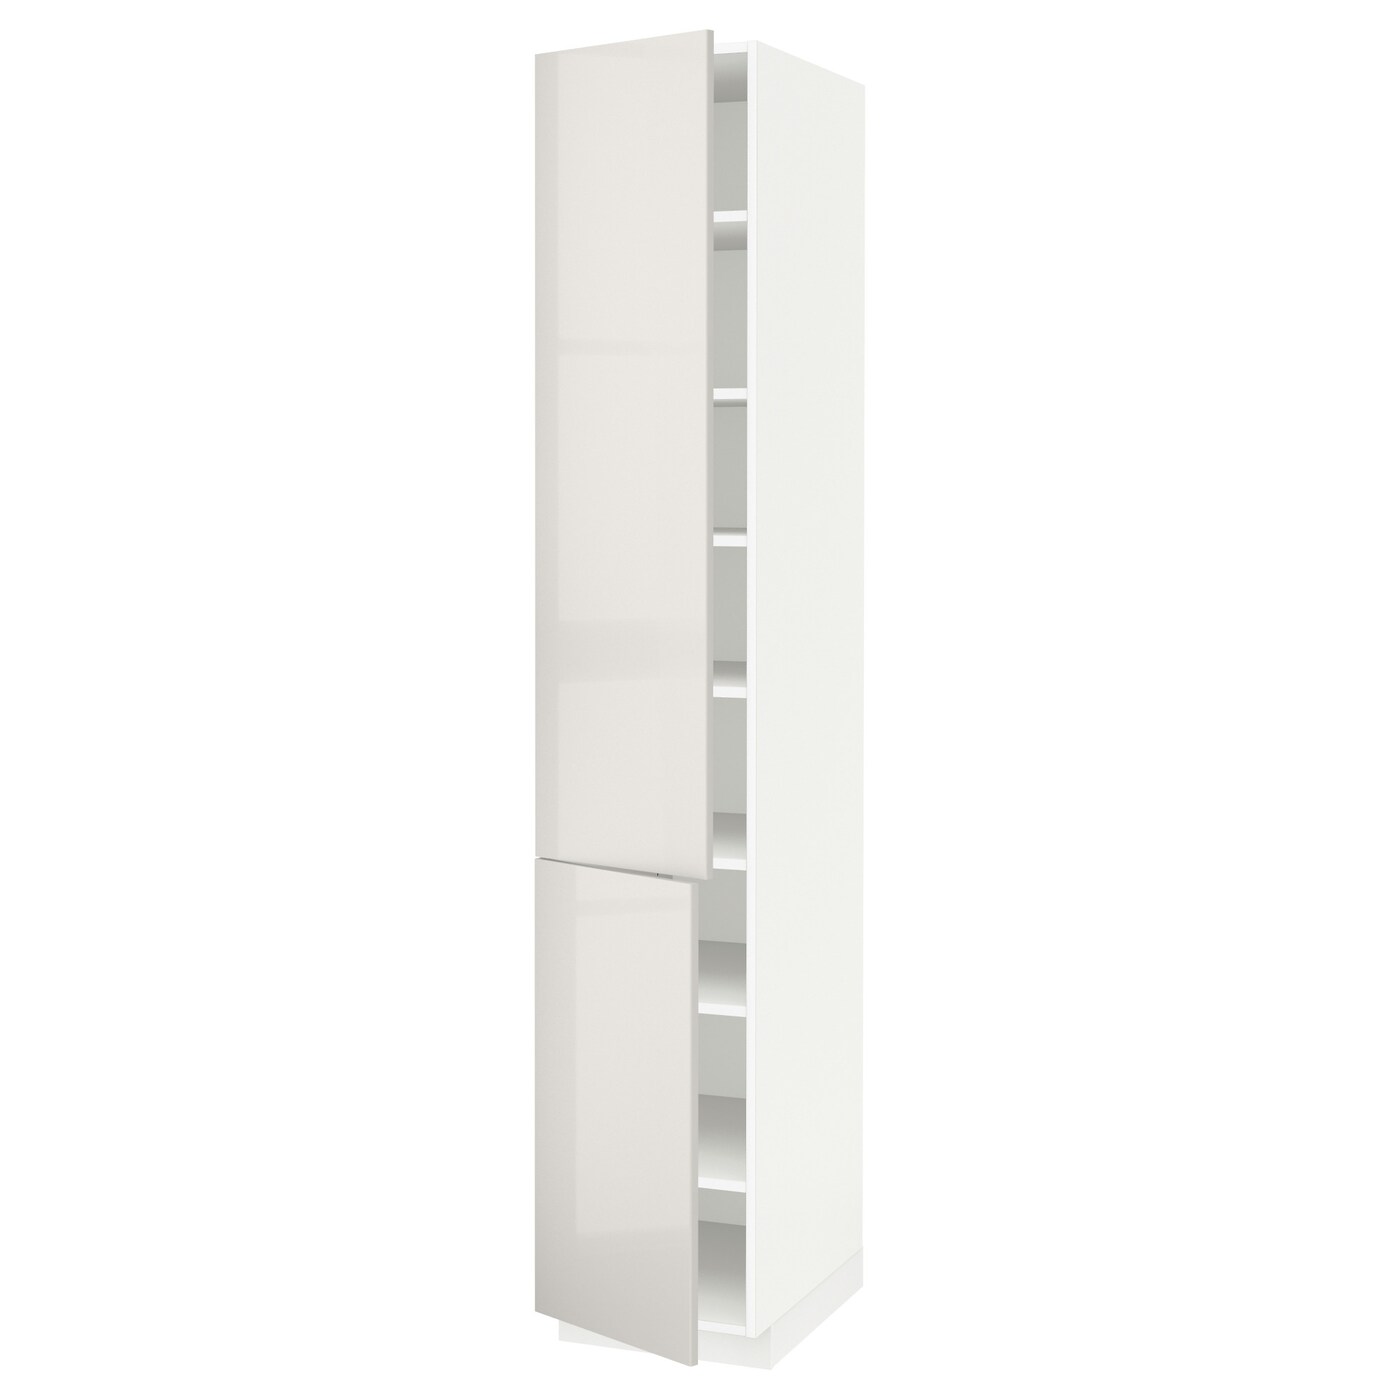 Высокий кухонный шкаф с полками - IKEA METOD/МЕТОД ИКЕА, 220х60х40 см, белый/светло-серый глянцевый